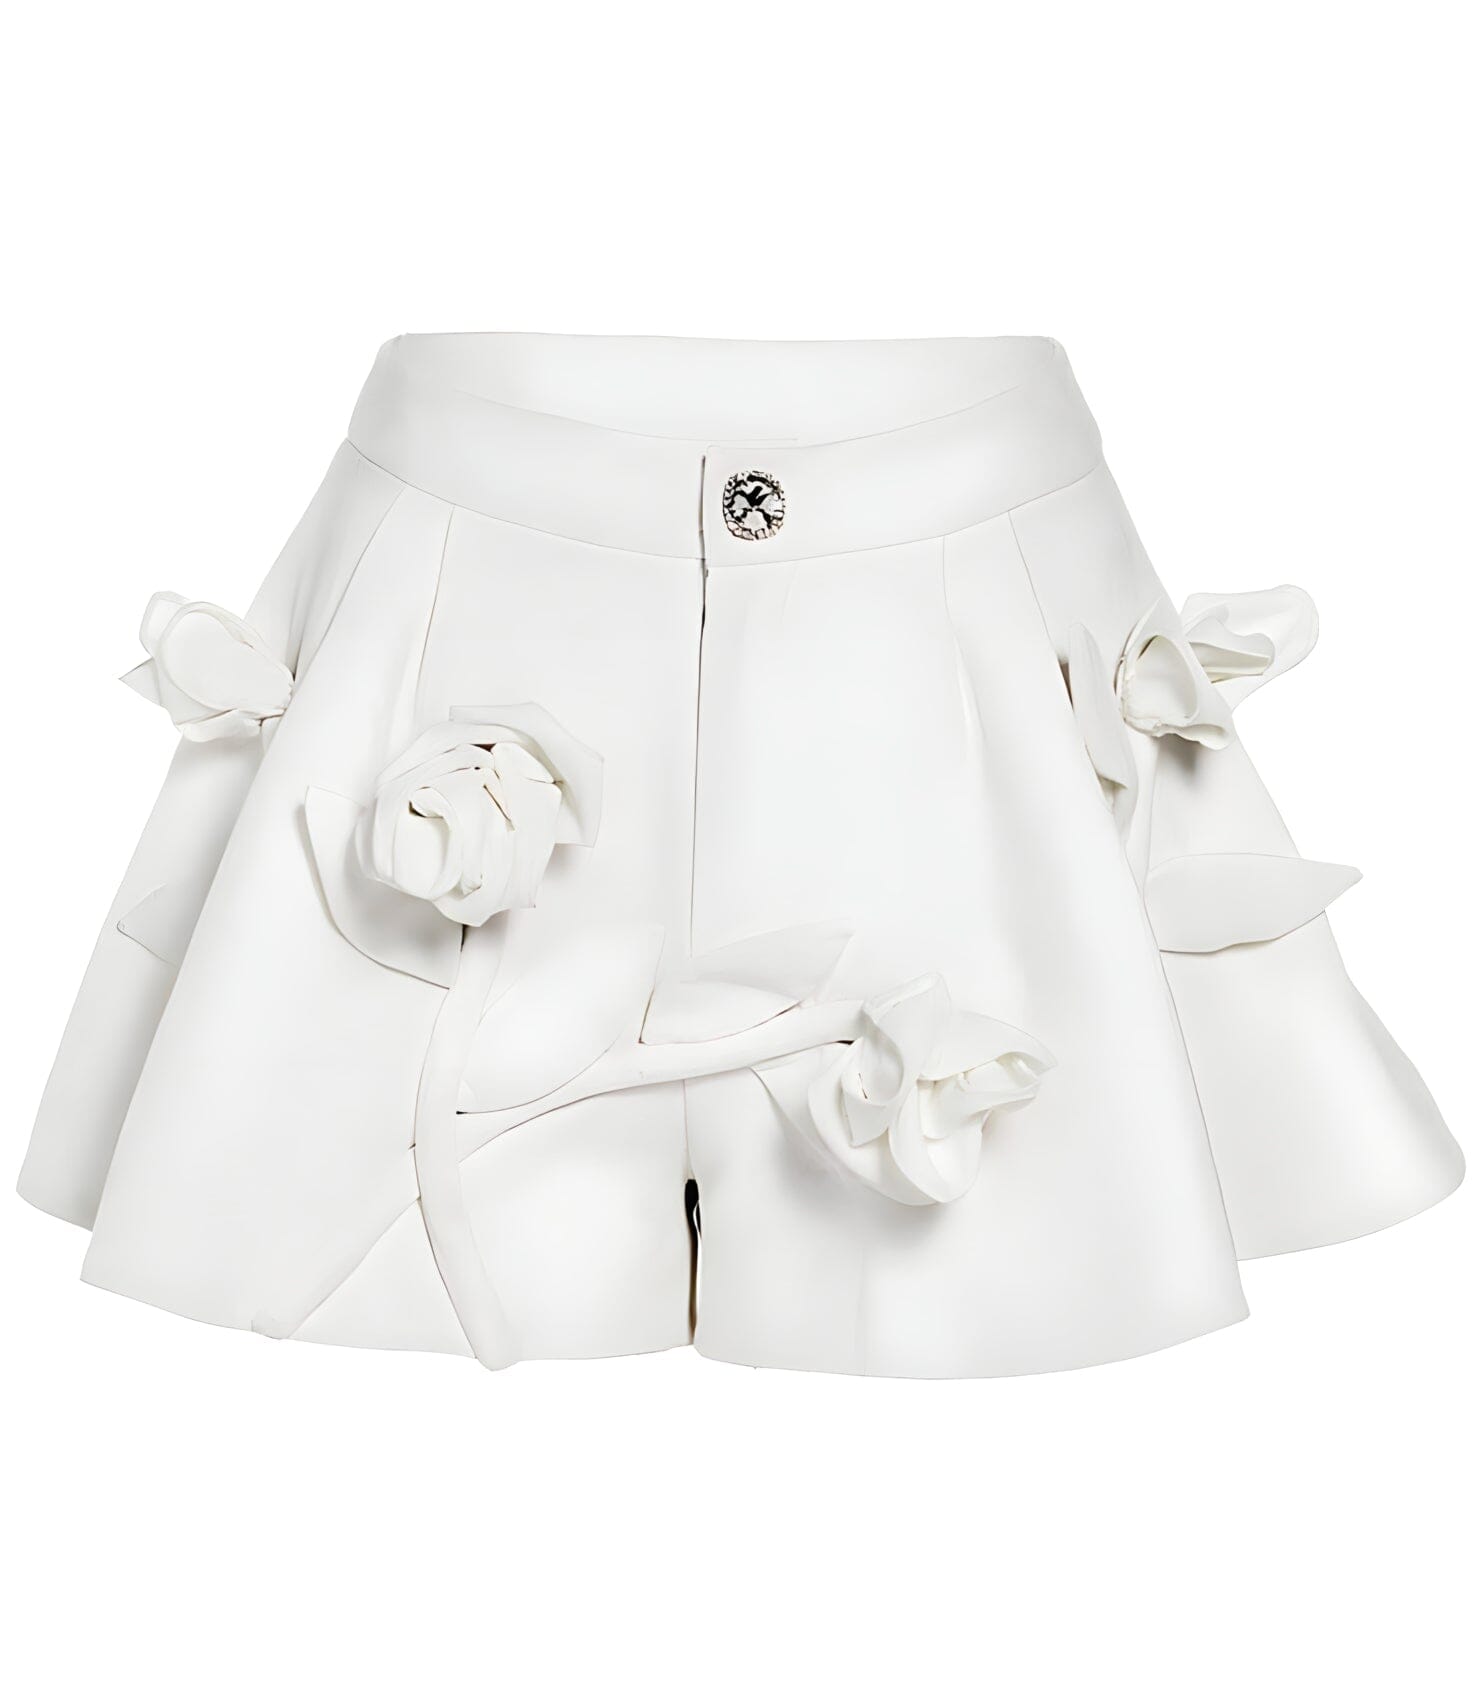 The Briar High Waist Appliqued Shorts - Multiple Colors 0 SA Styles White S 